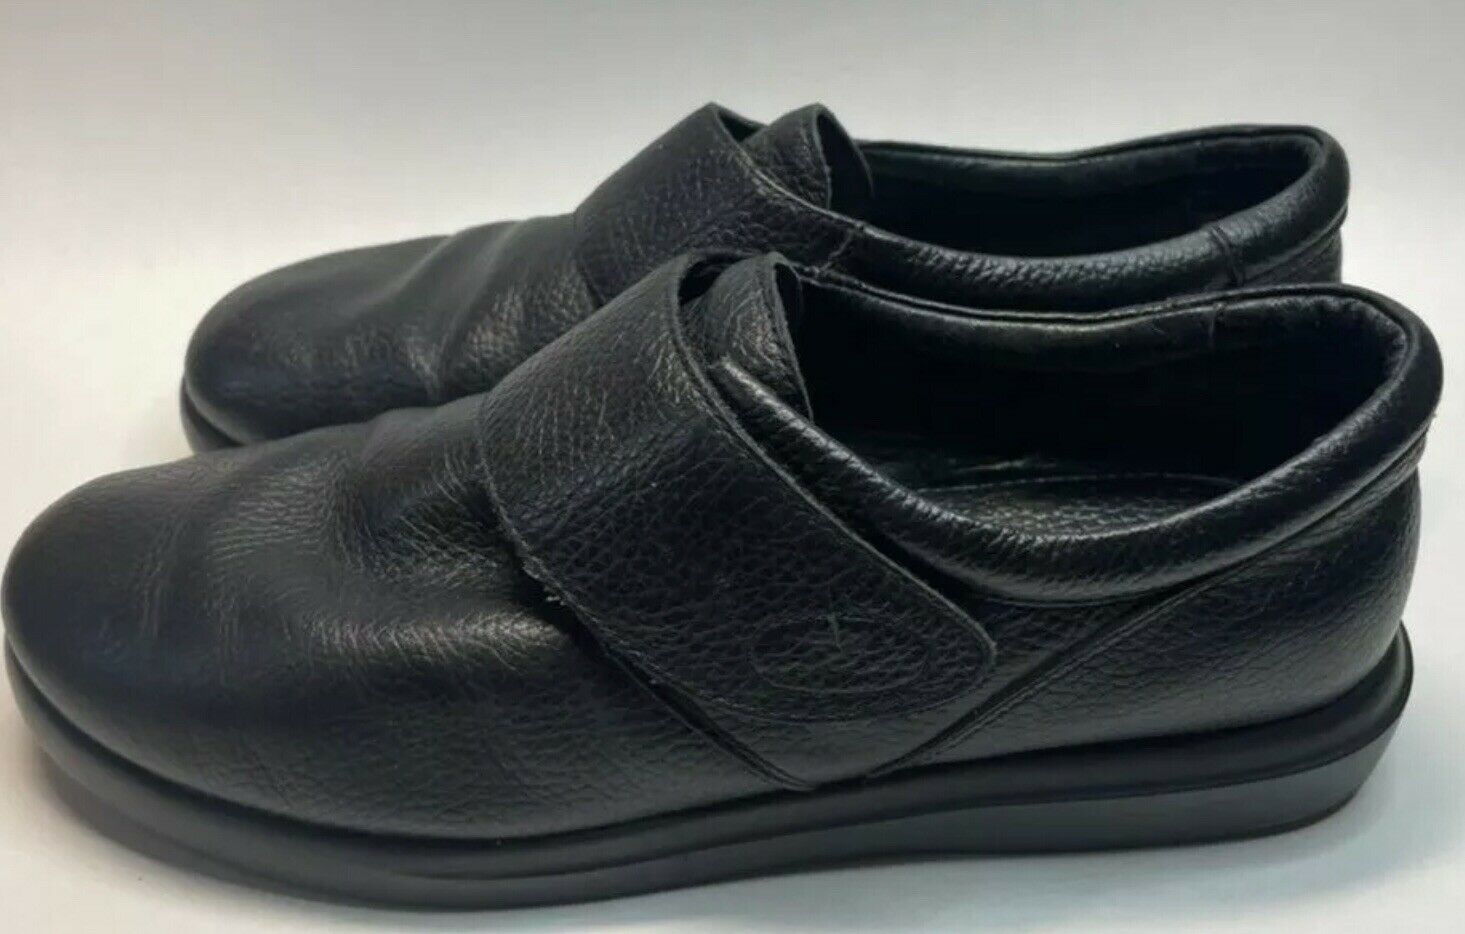 PROPET Leather Walking Shoes Diabetic Hook Loop Closure Women's Size 9